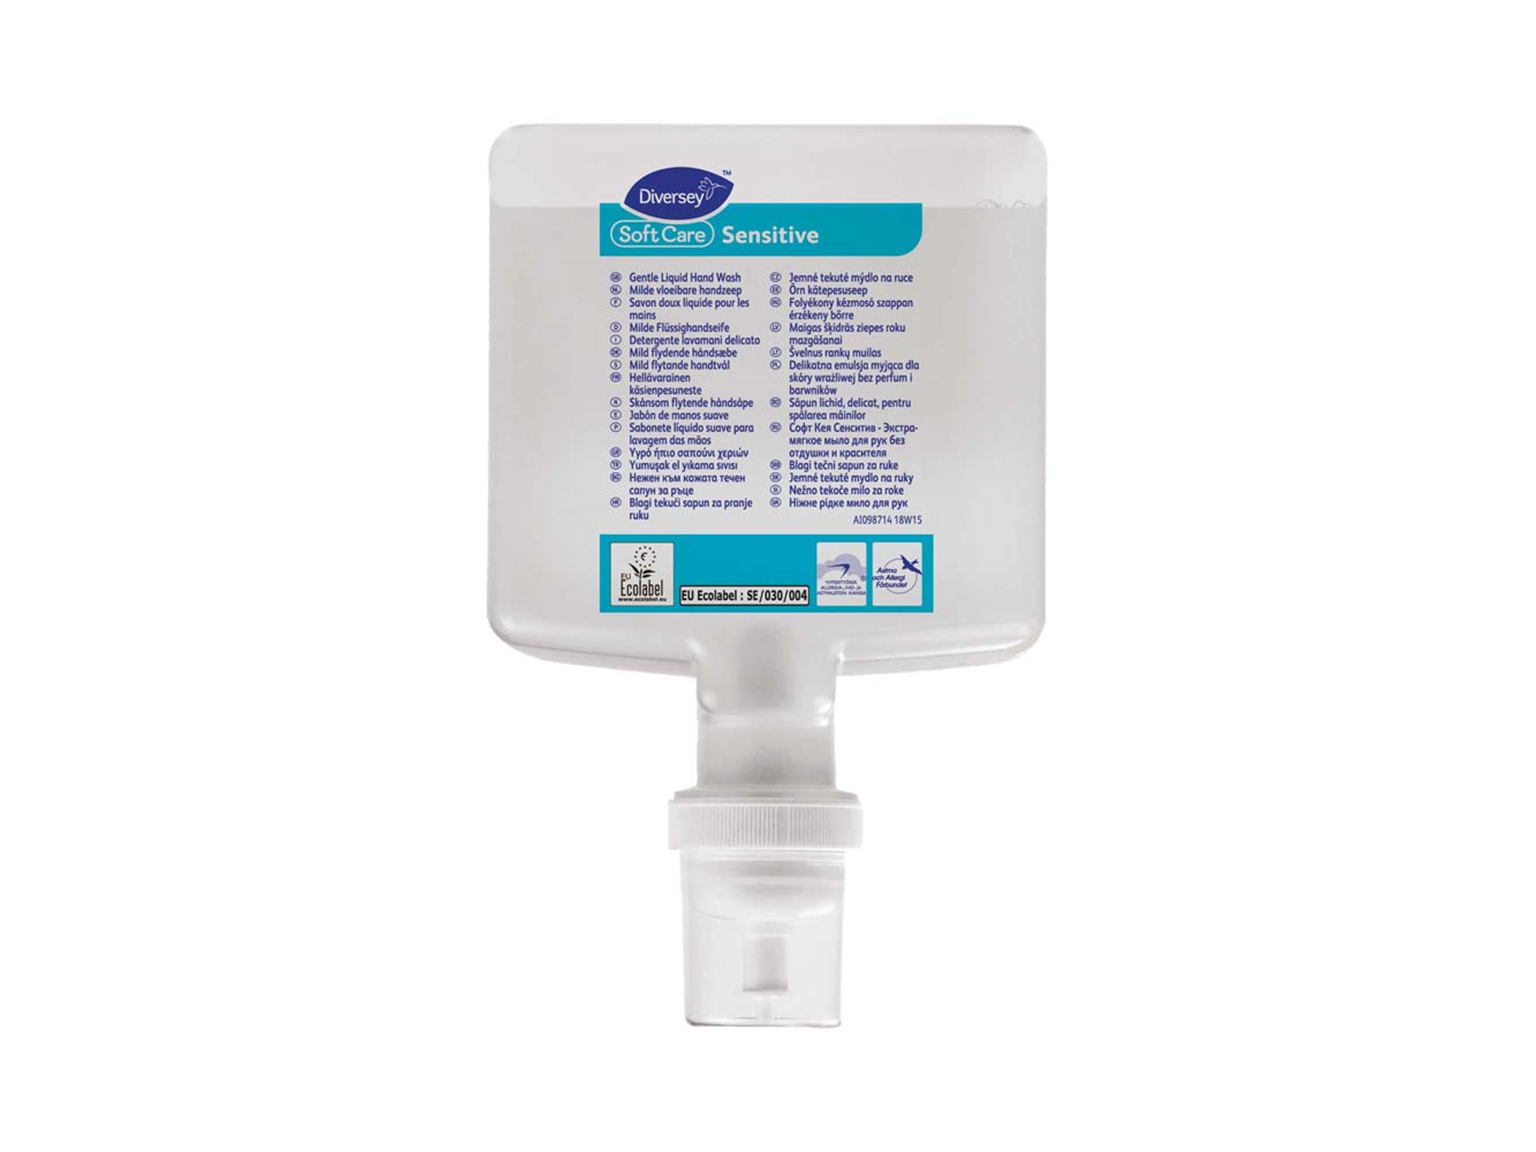 Seifenlotion Diversey Soft Care Sensitive IC, 4 x 1.3 L Flasche